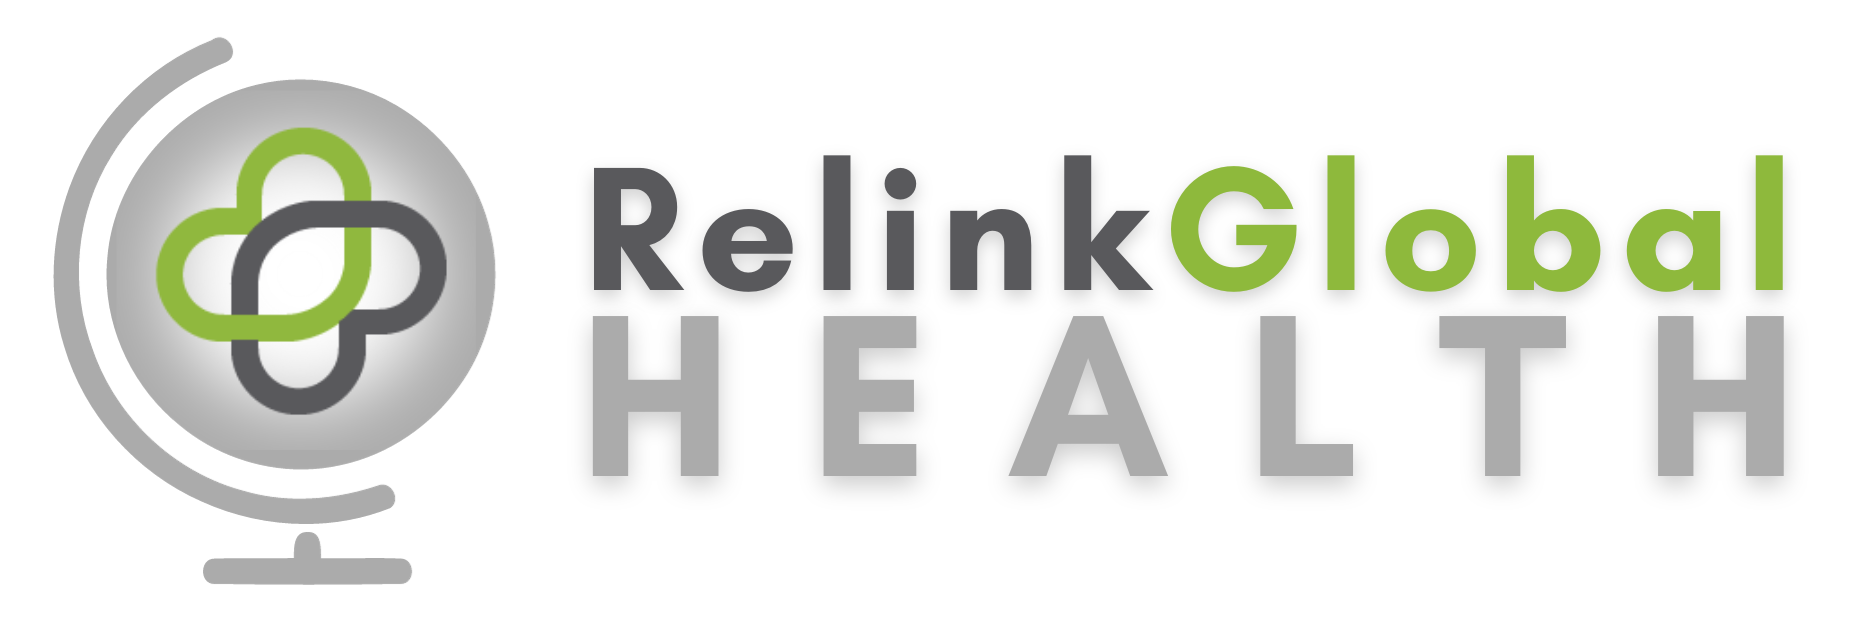 reLinkGlobalHealth.org